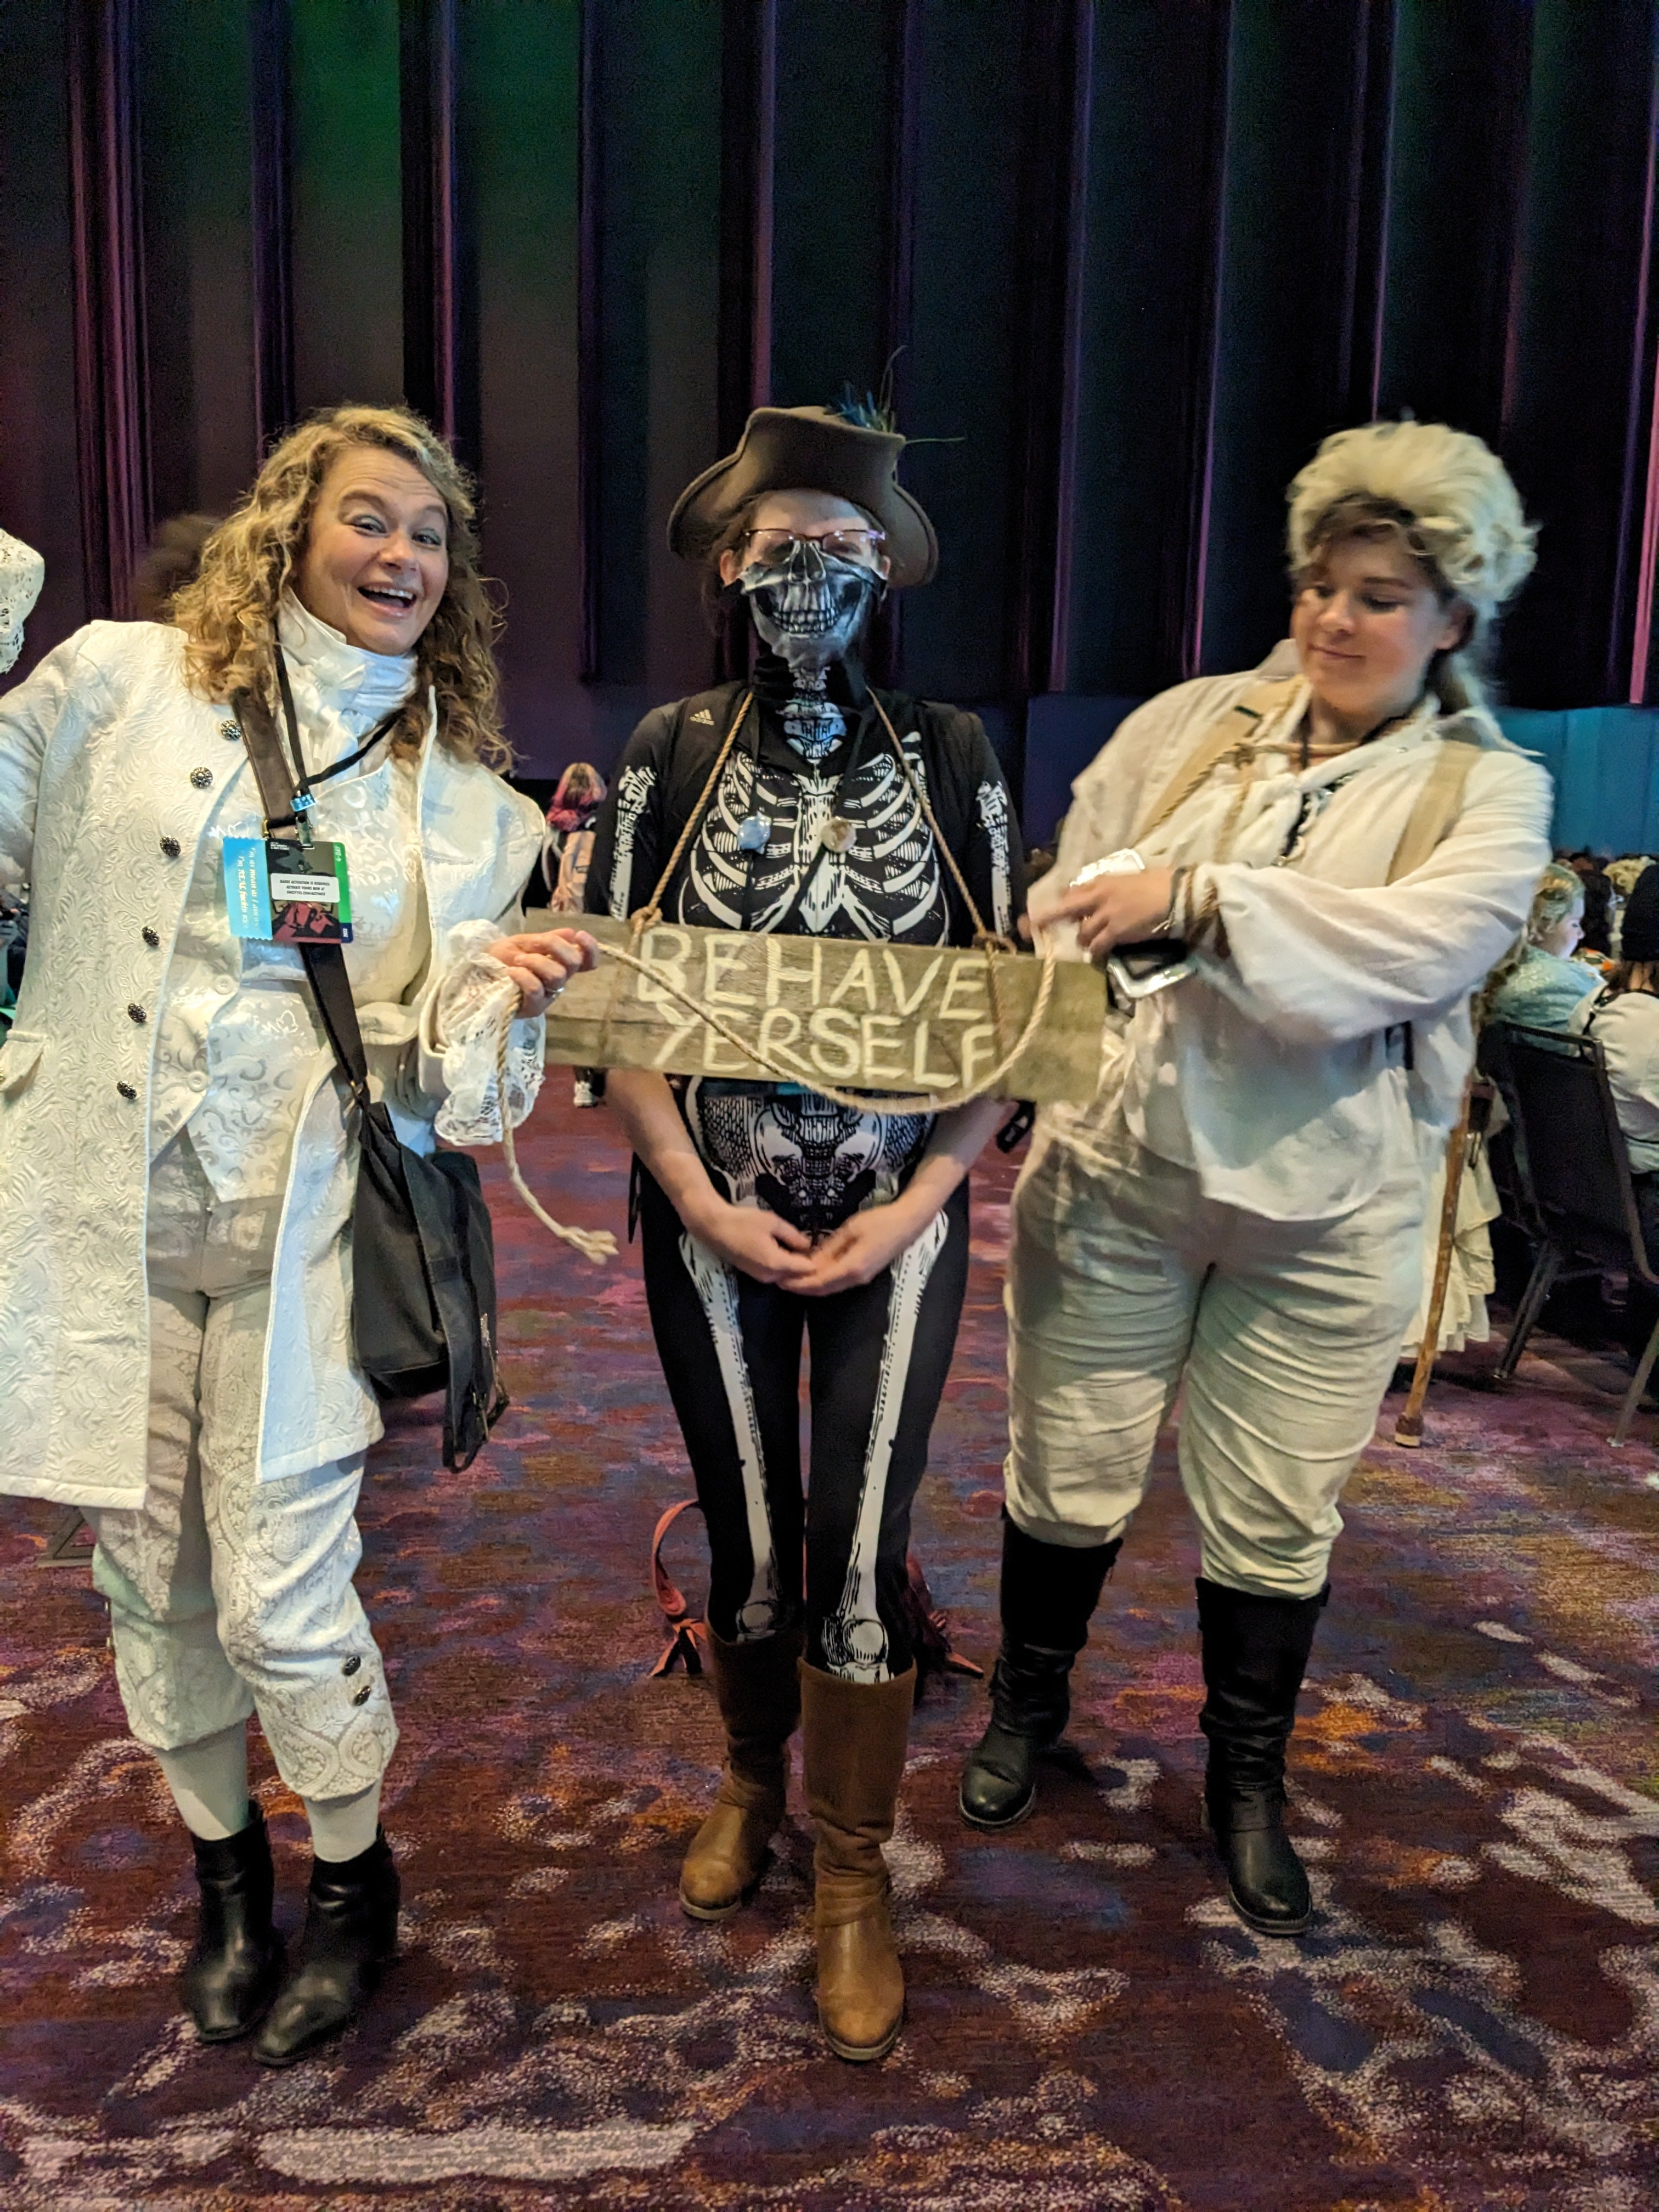 Three people in costume